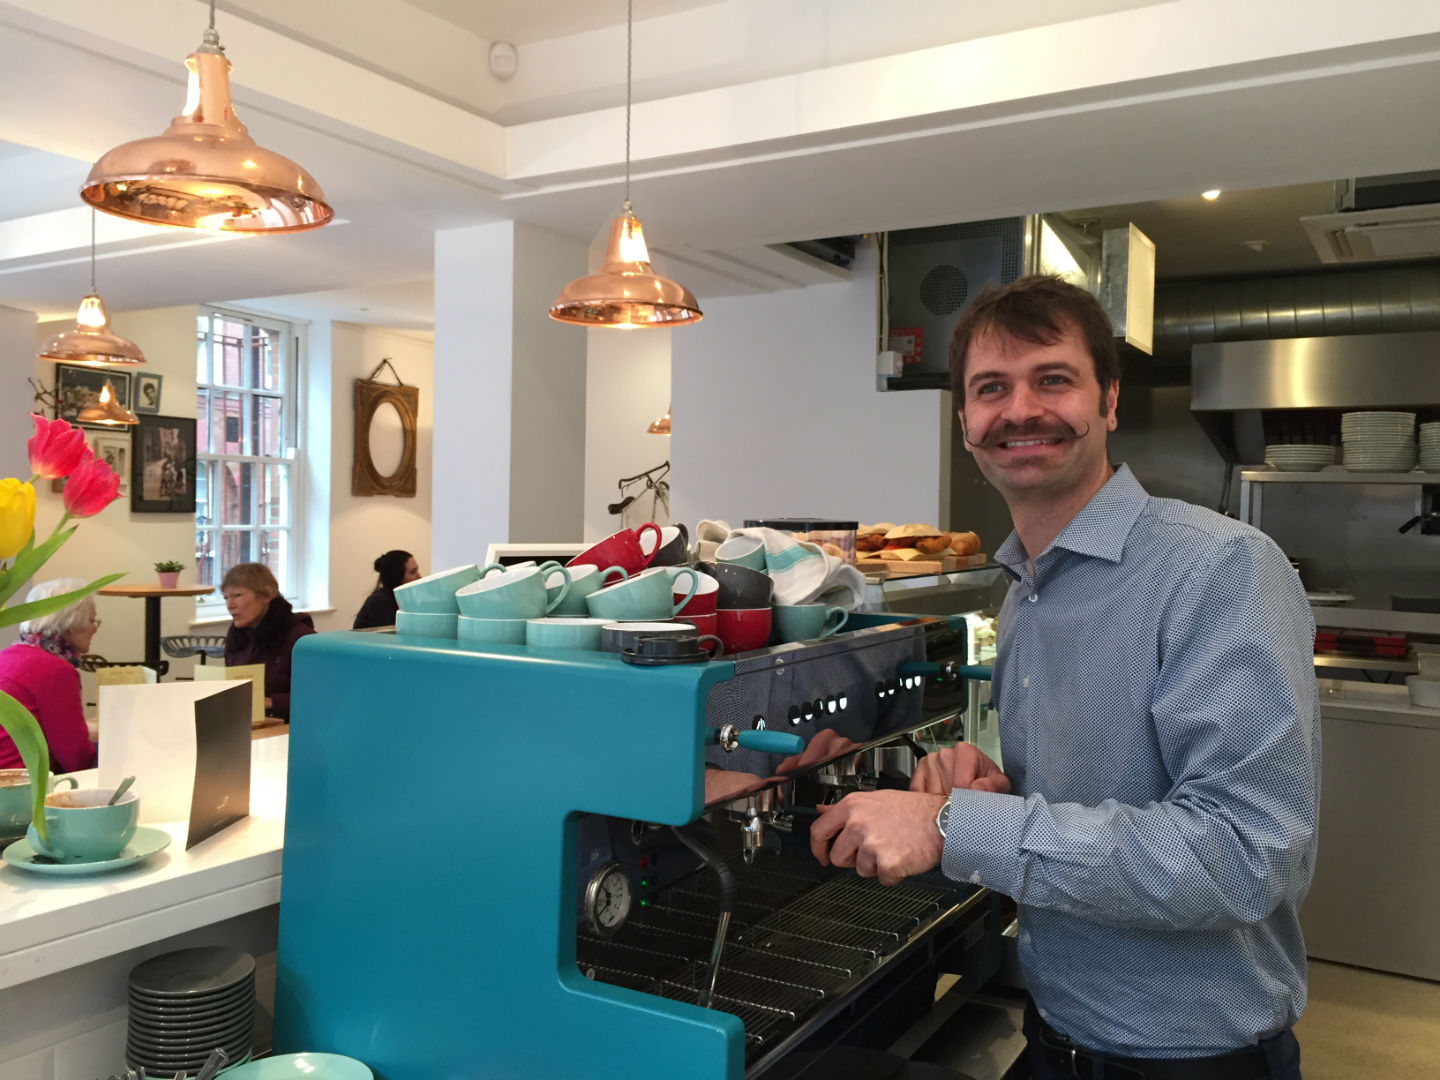 Owner Giuseppe cranks up the coffee machine. Photo: SE